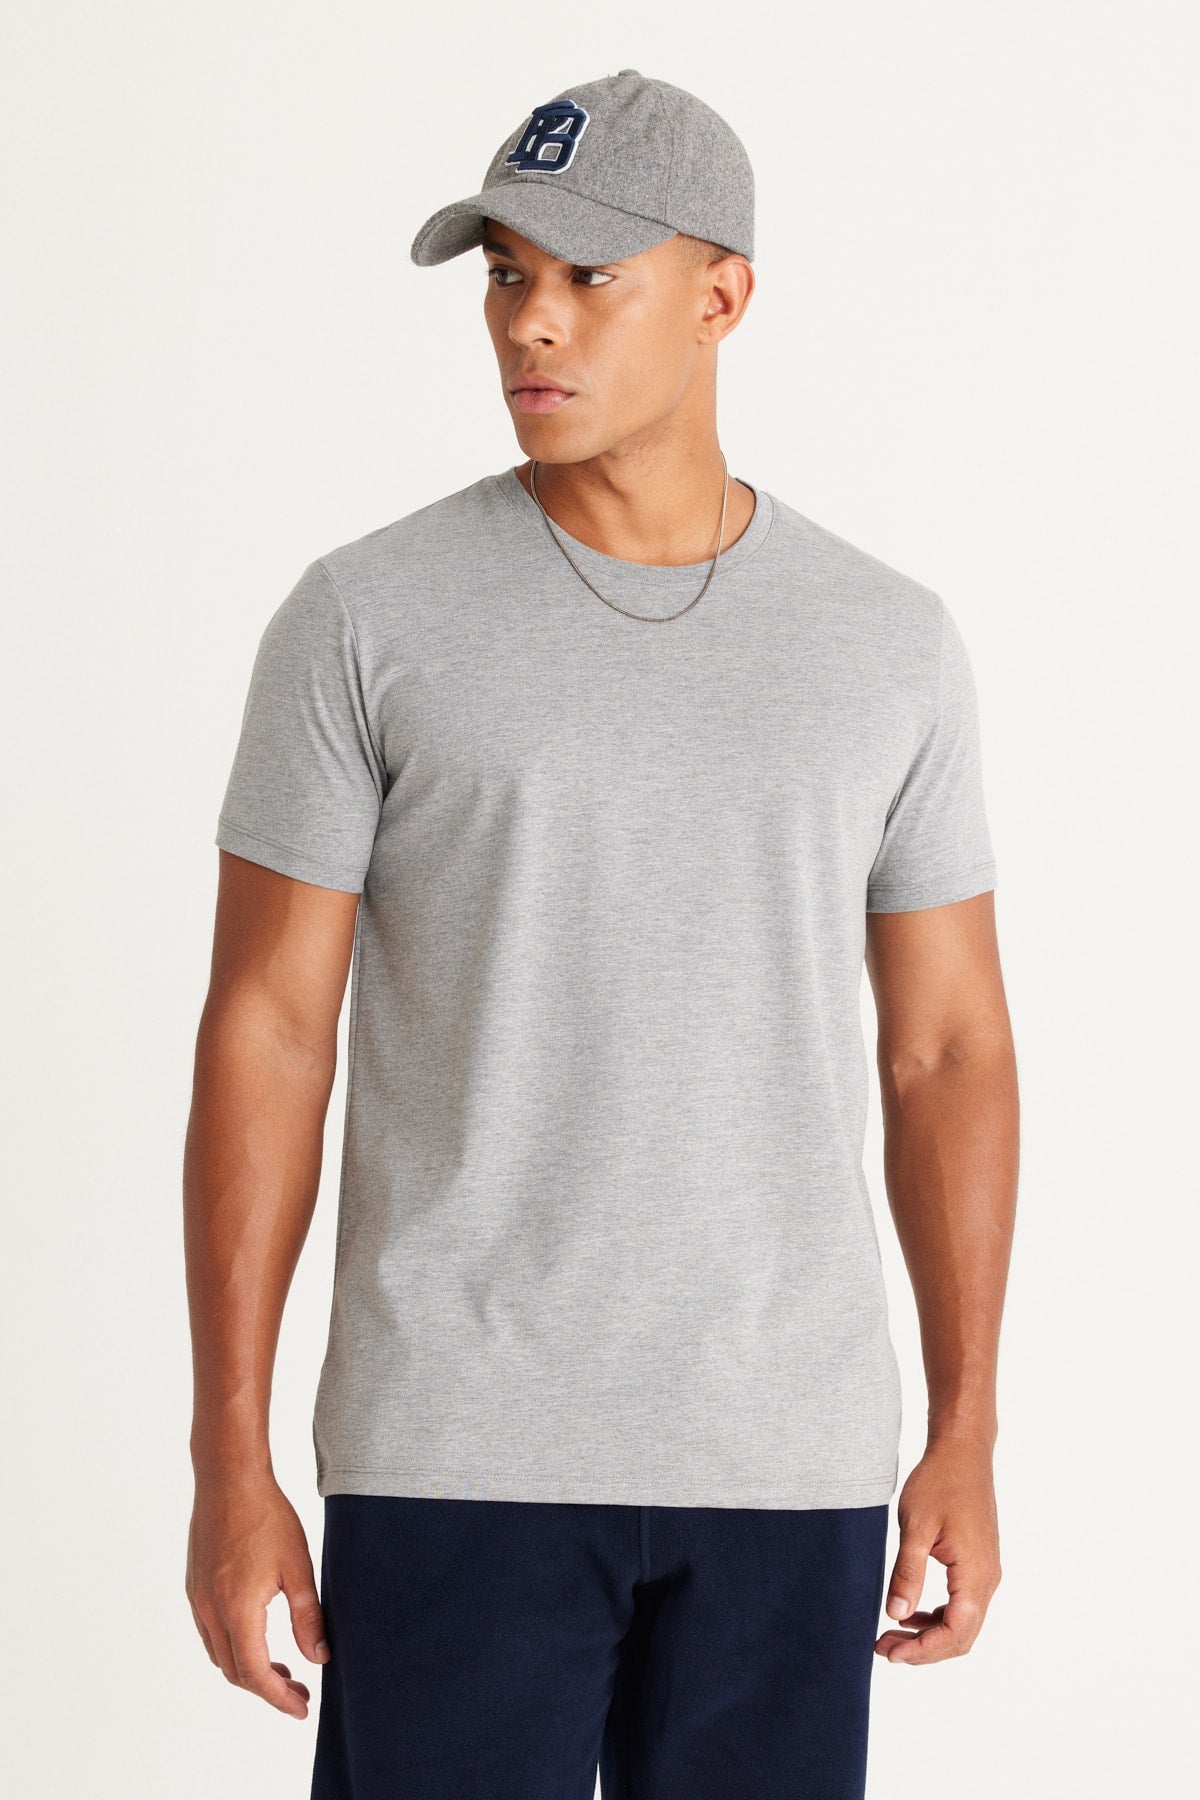 Men's Dark Gray Cotton Slim Fit Slim Fit Crew Neck Short Sleeved T-Shirt